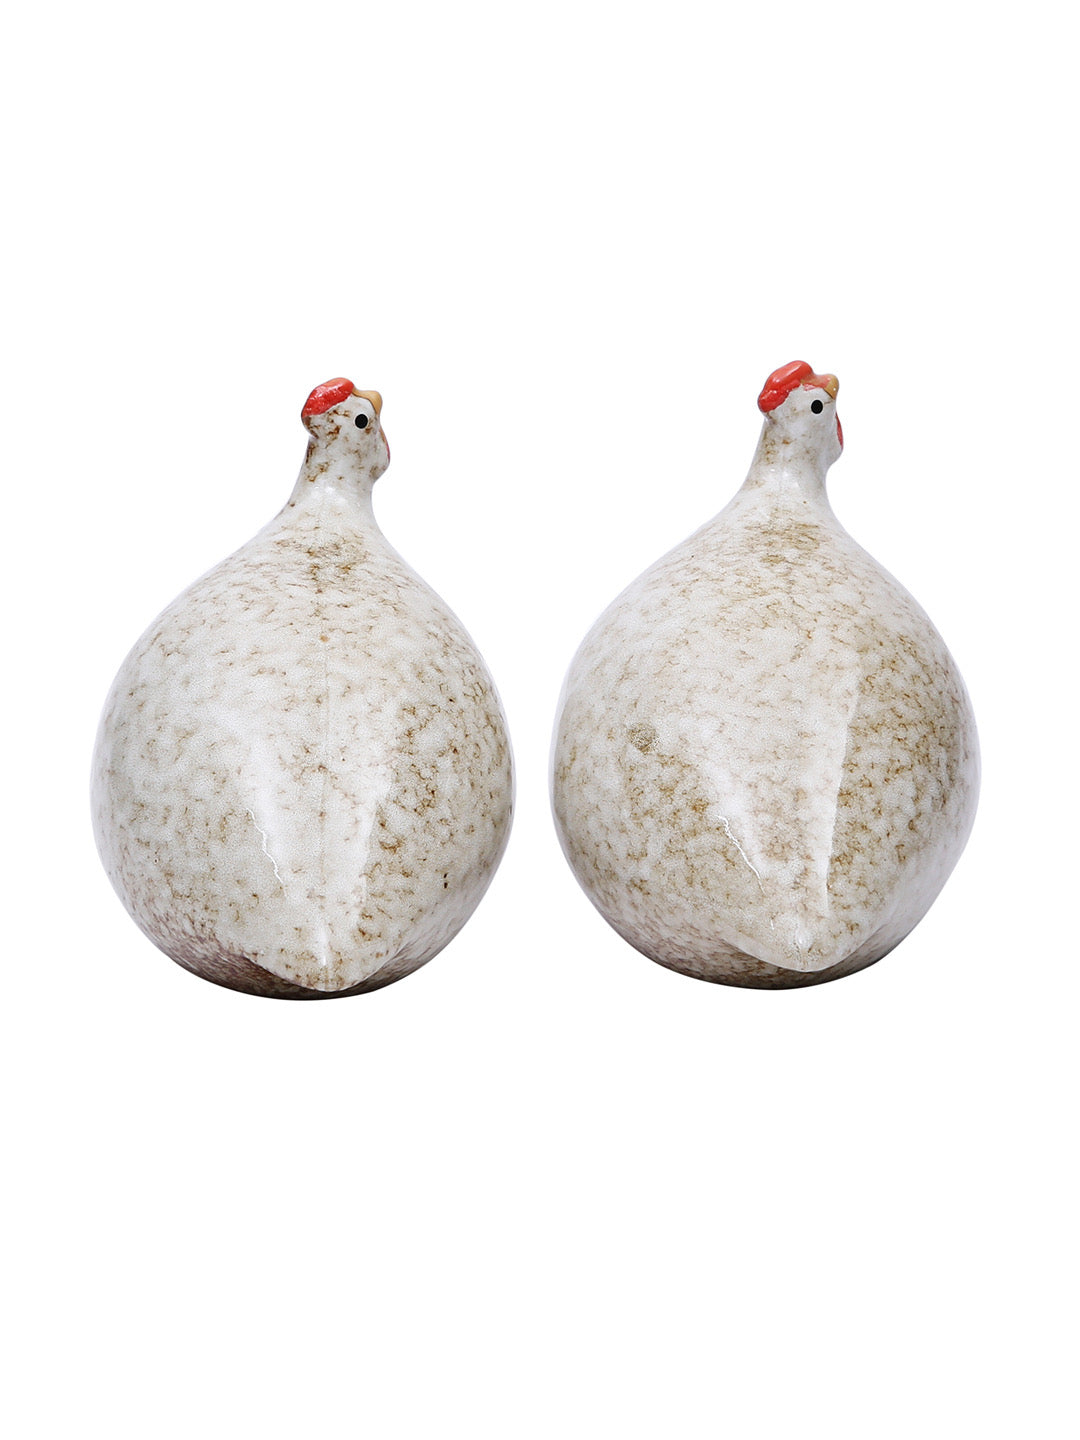 Hefty but Appealing Ceramic Hen Duo Set - Default Title (SHOW19547)